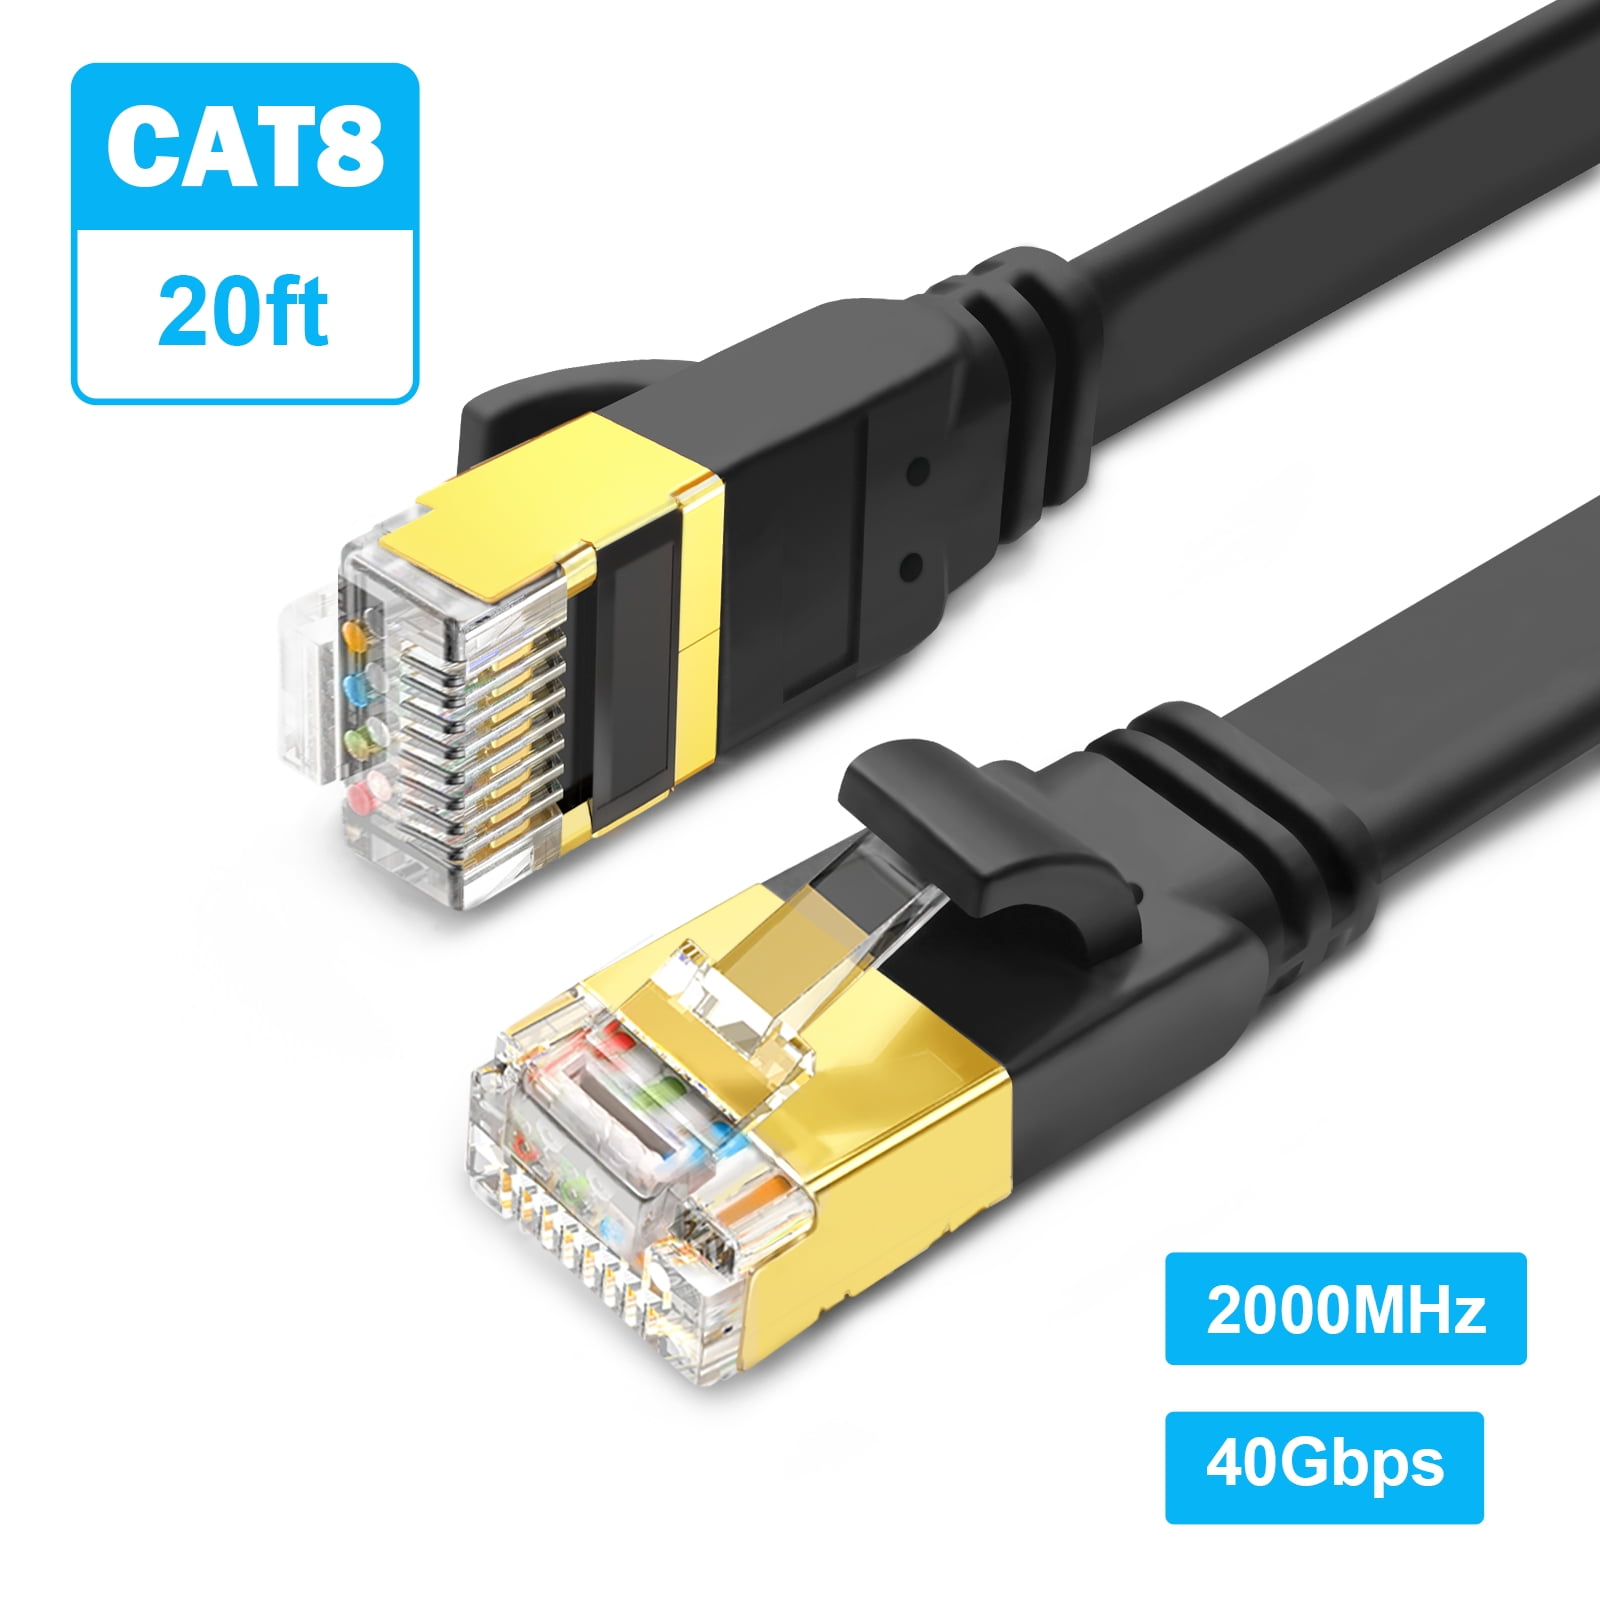  CAT8 Ethernet Cable, Outdoor&Indoor, 20FT Heavy Duty